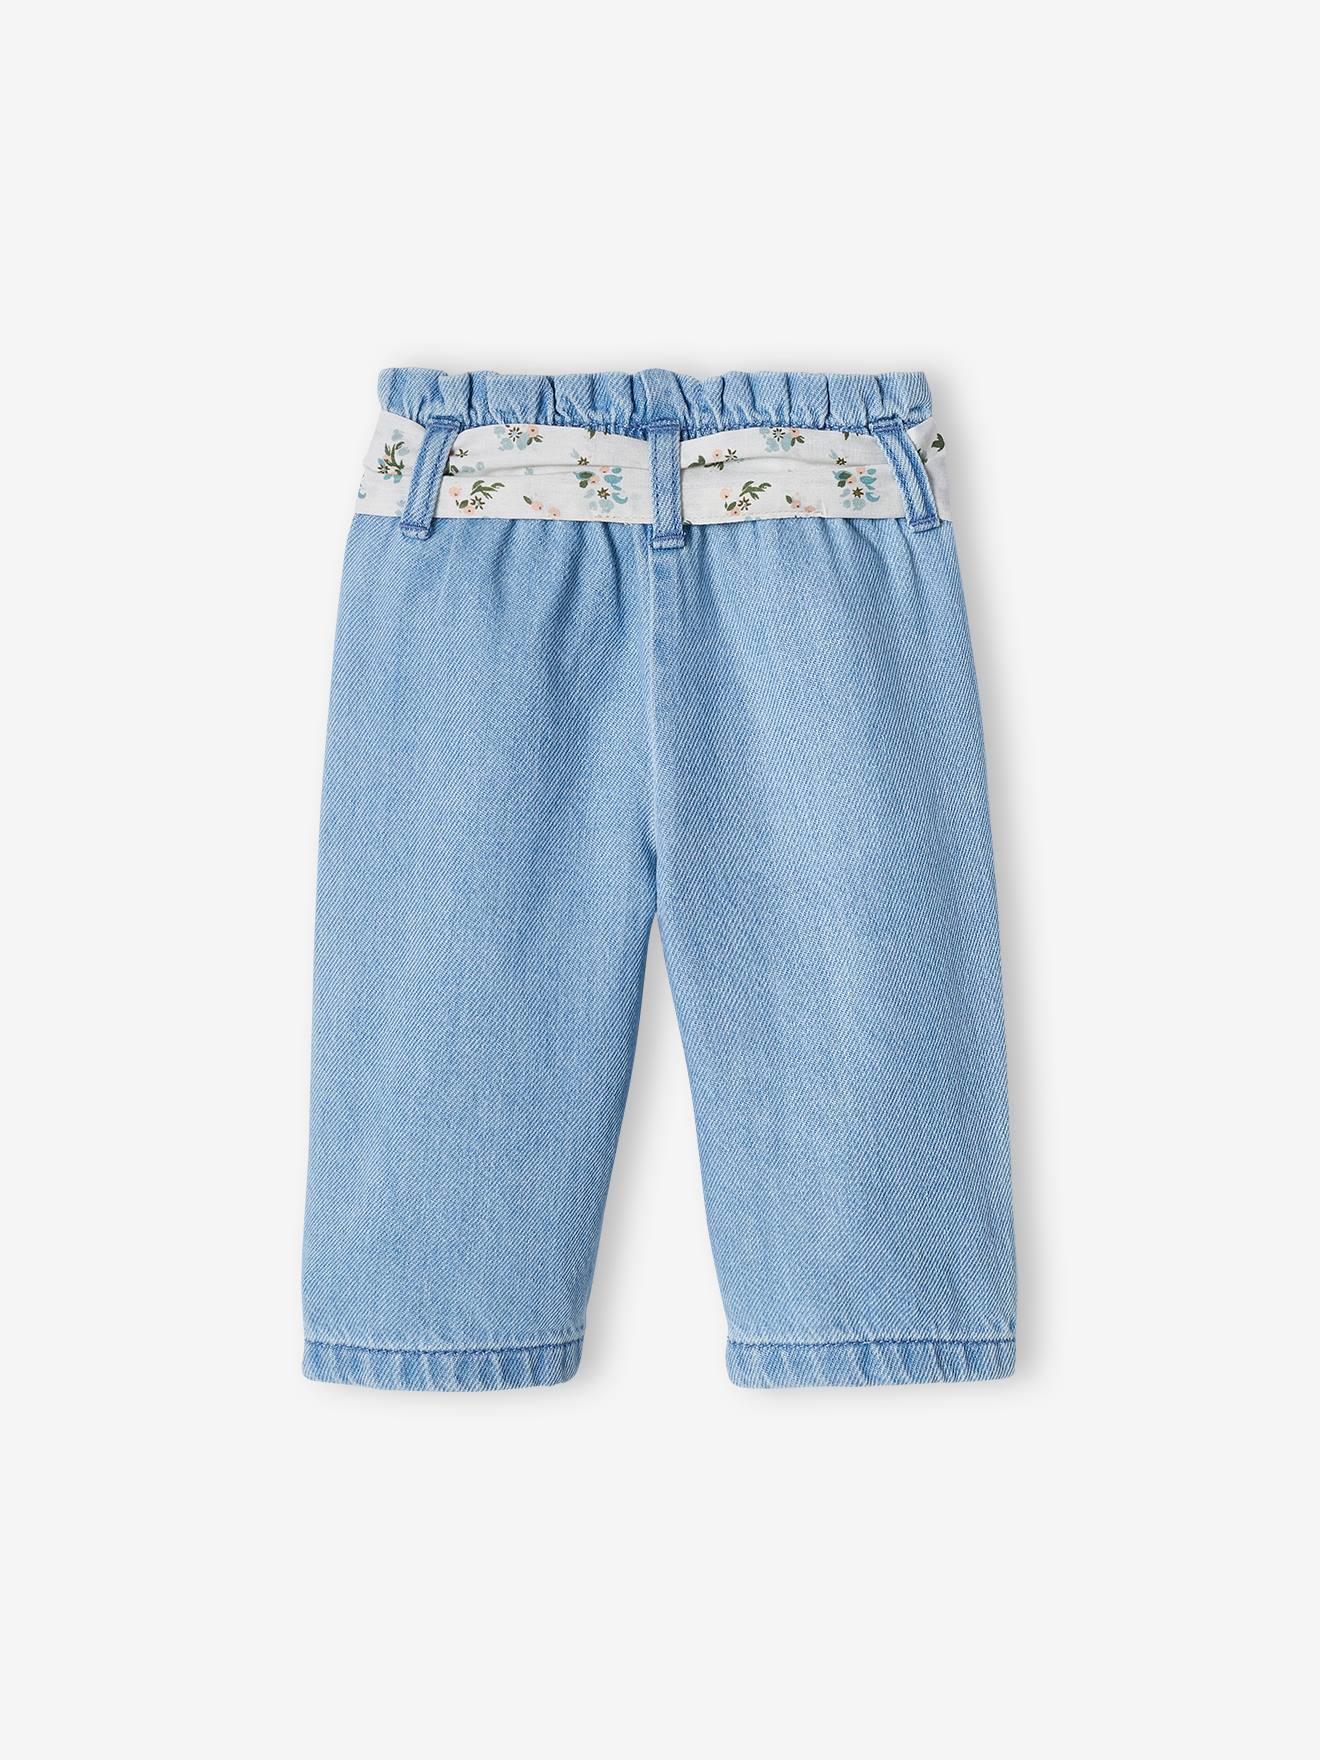 Wide Leg Jeans, Baby Fabric Babies for bleached Belt, denim, 